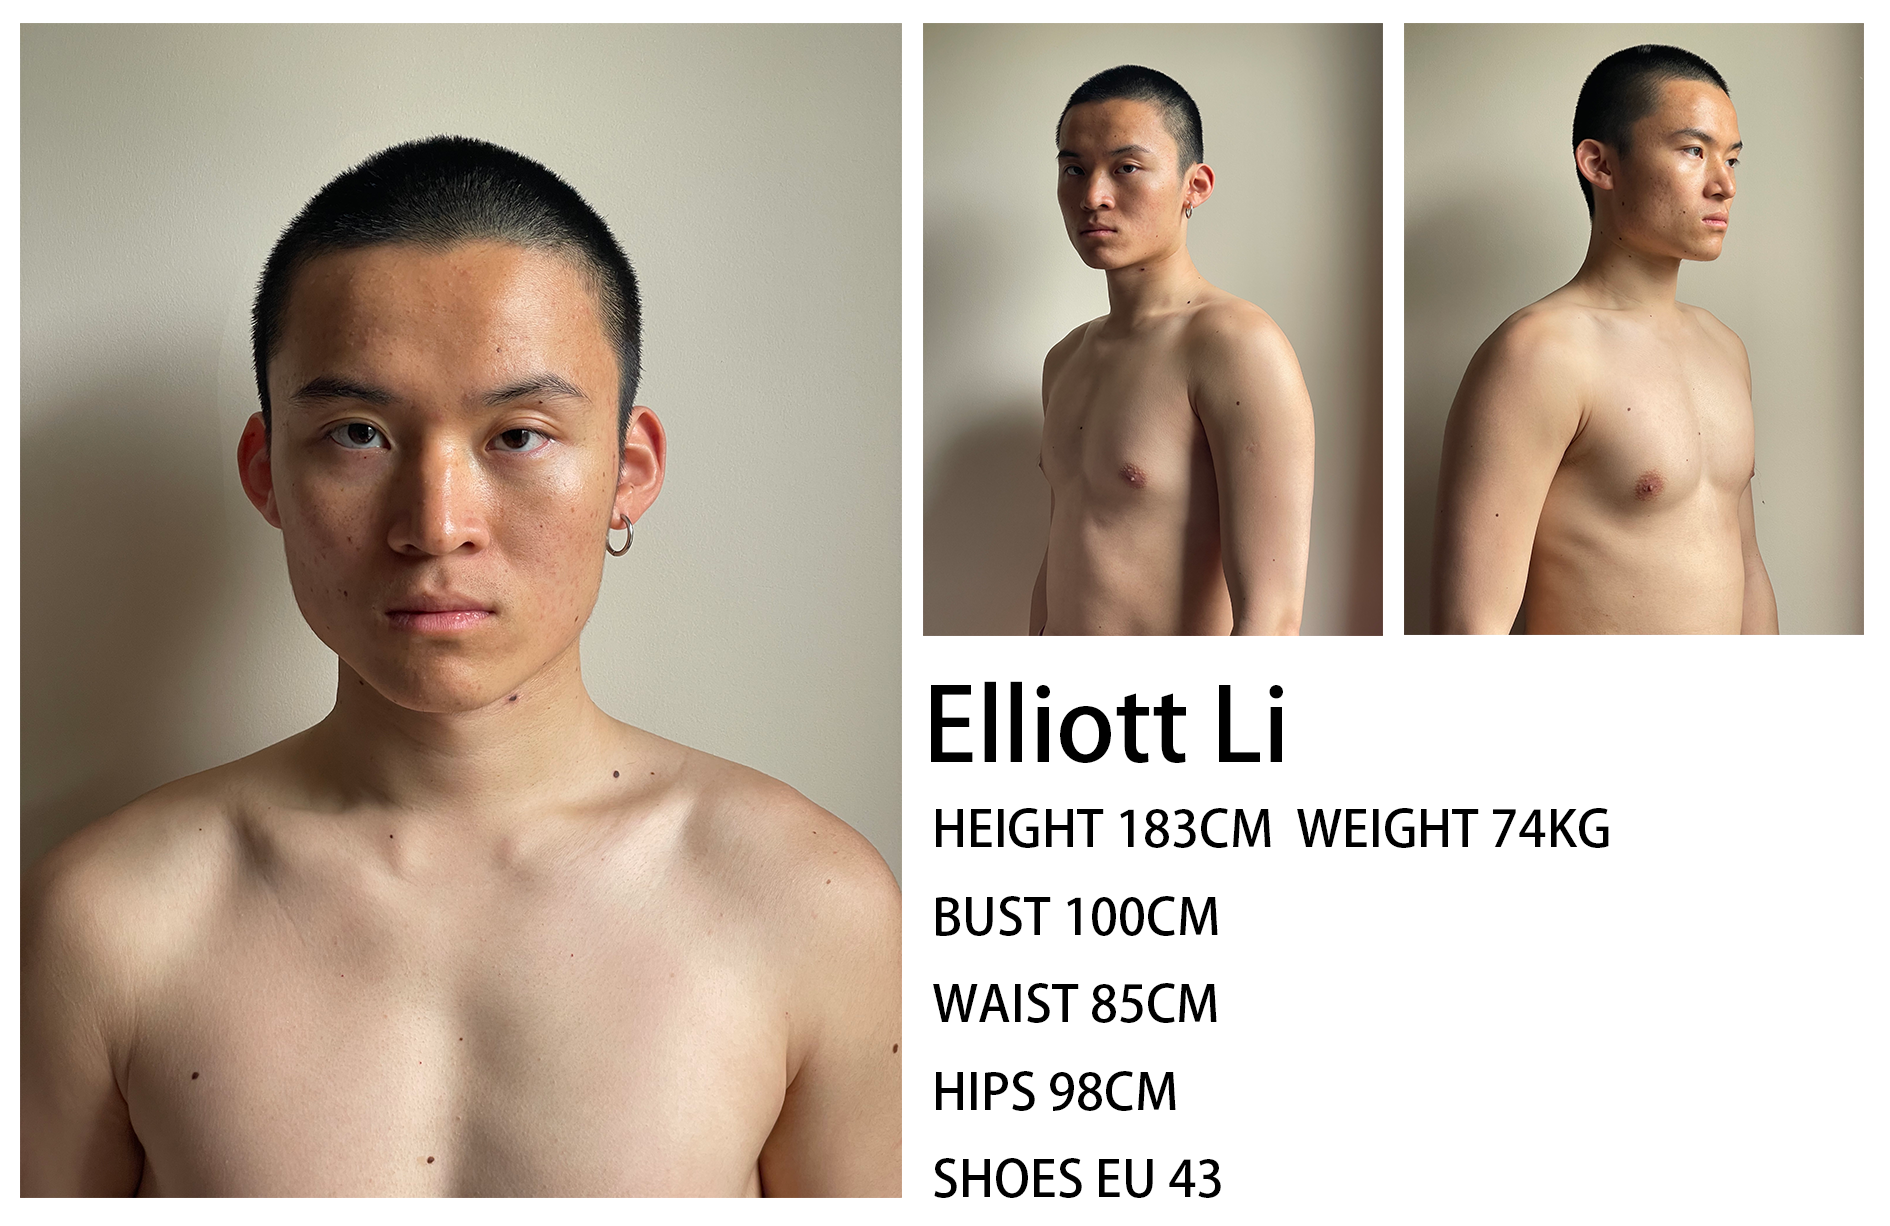 An image of Elliott Li